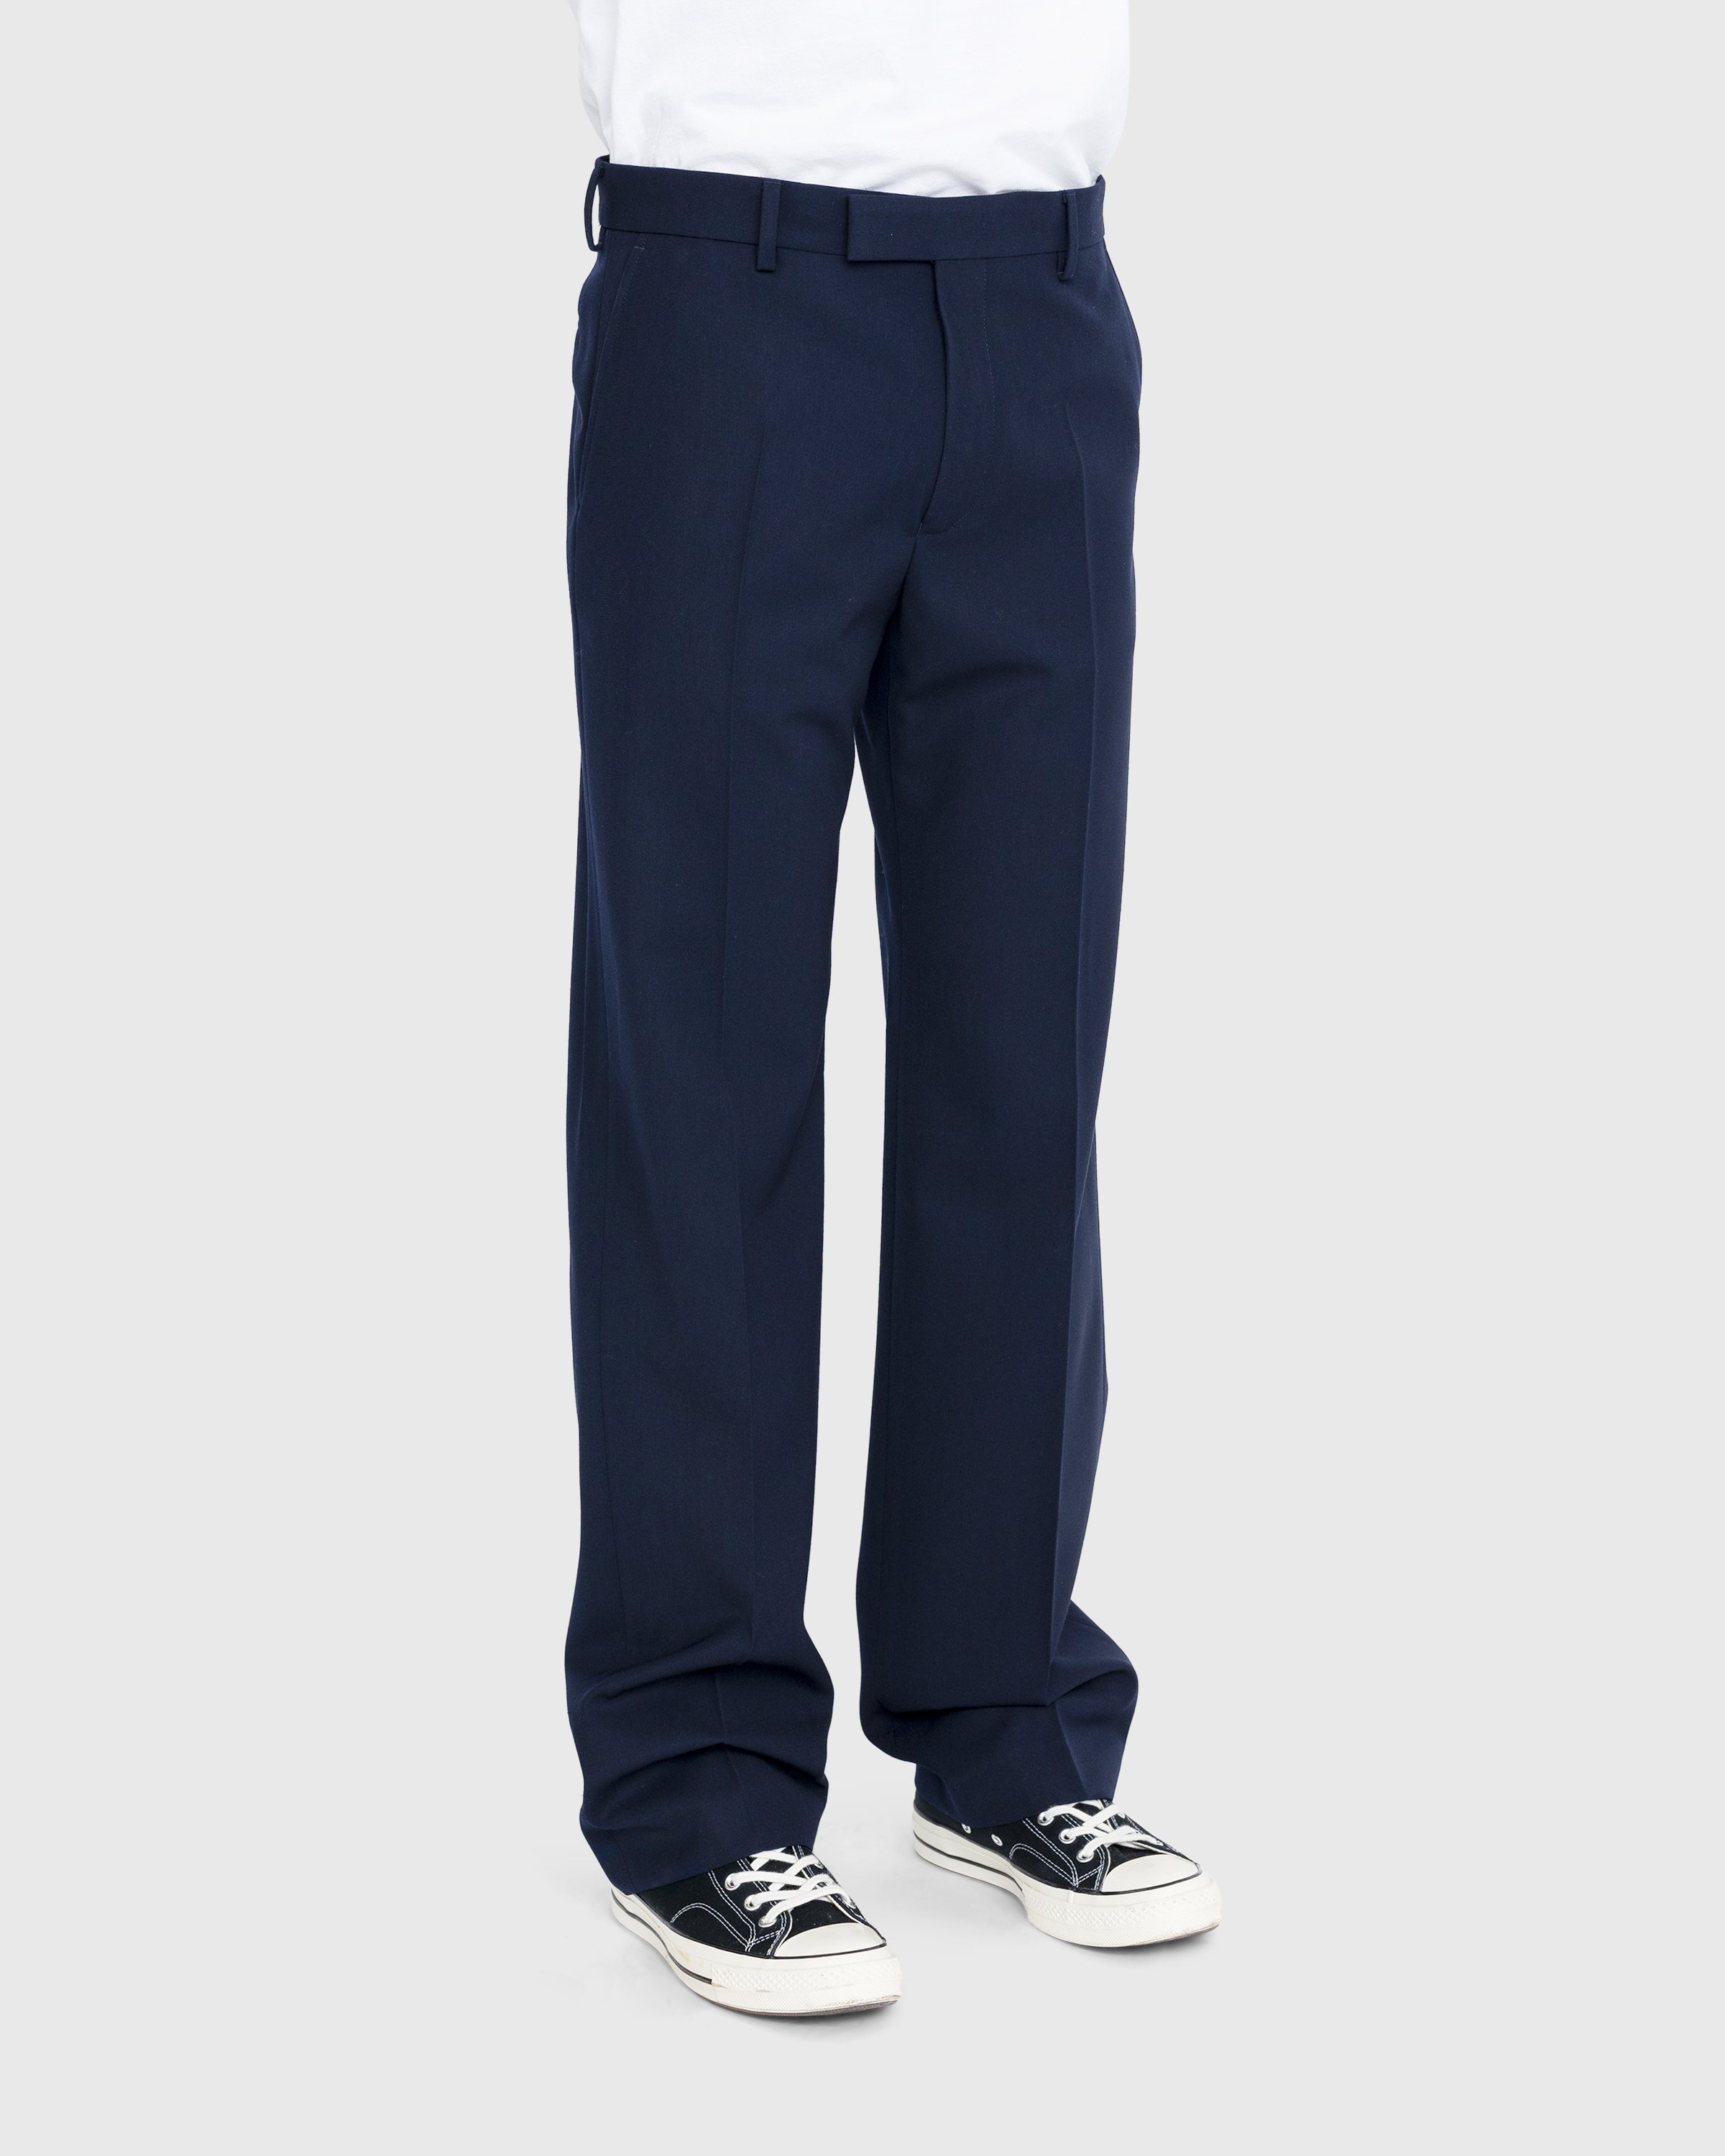 Dries van Noten – Pinnet Long Pants Blue - Trousers - Blue - Image 3